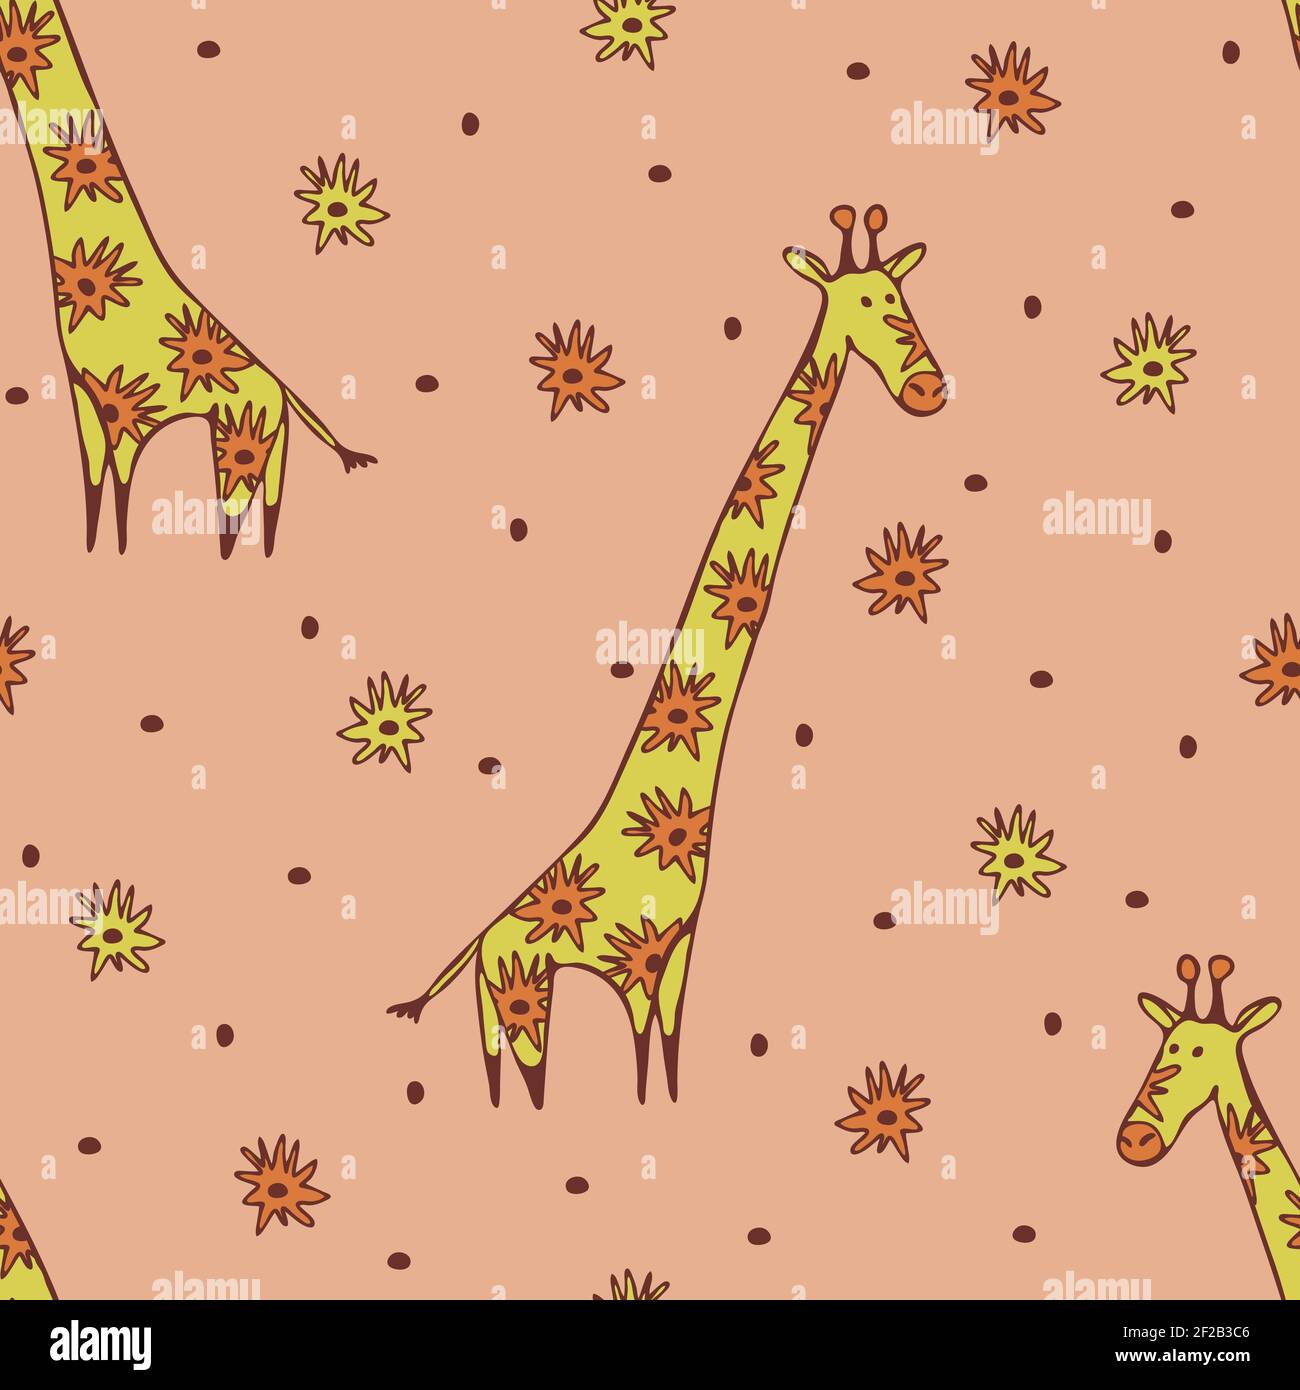 Best Giraffe iPhone 8 HD Wallpapers  iLikeWallpaper